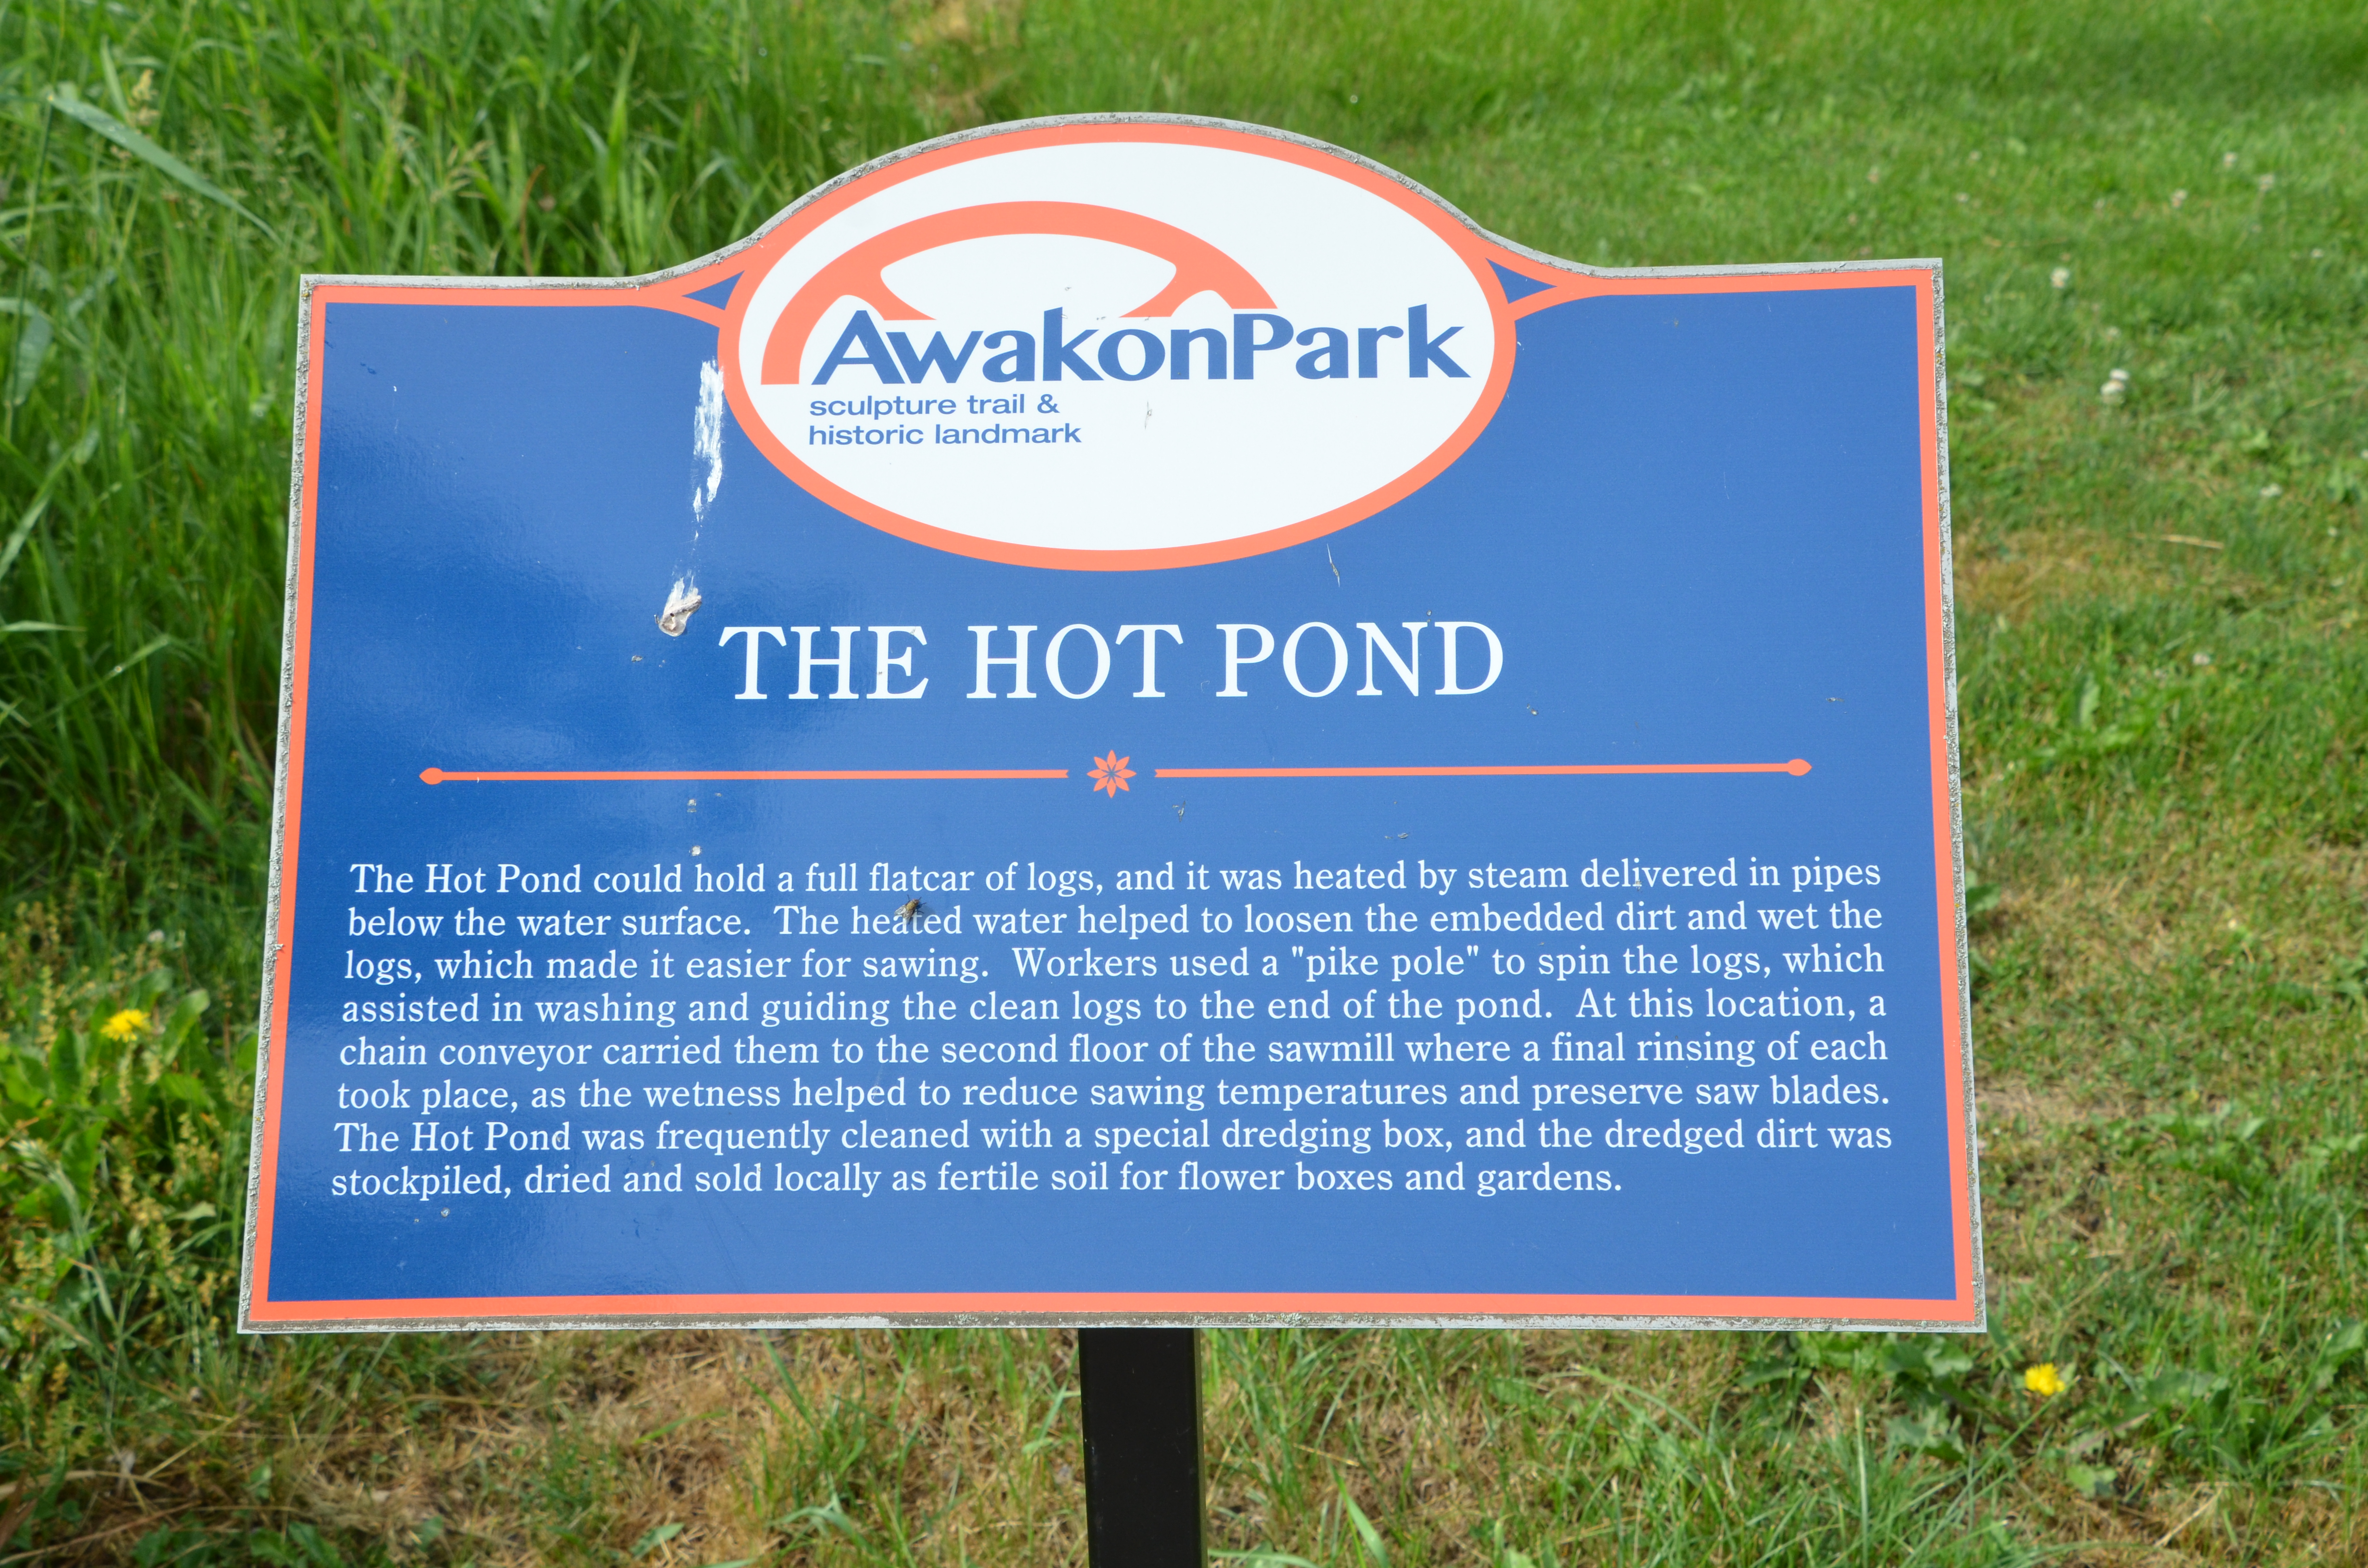 Awakon Park Hot Pond Information Sign Factory Ruins